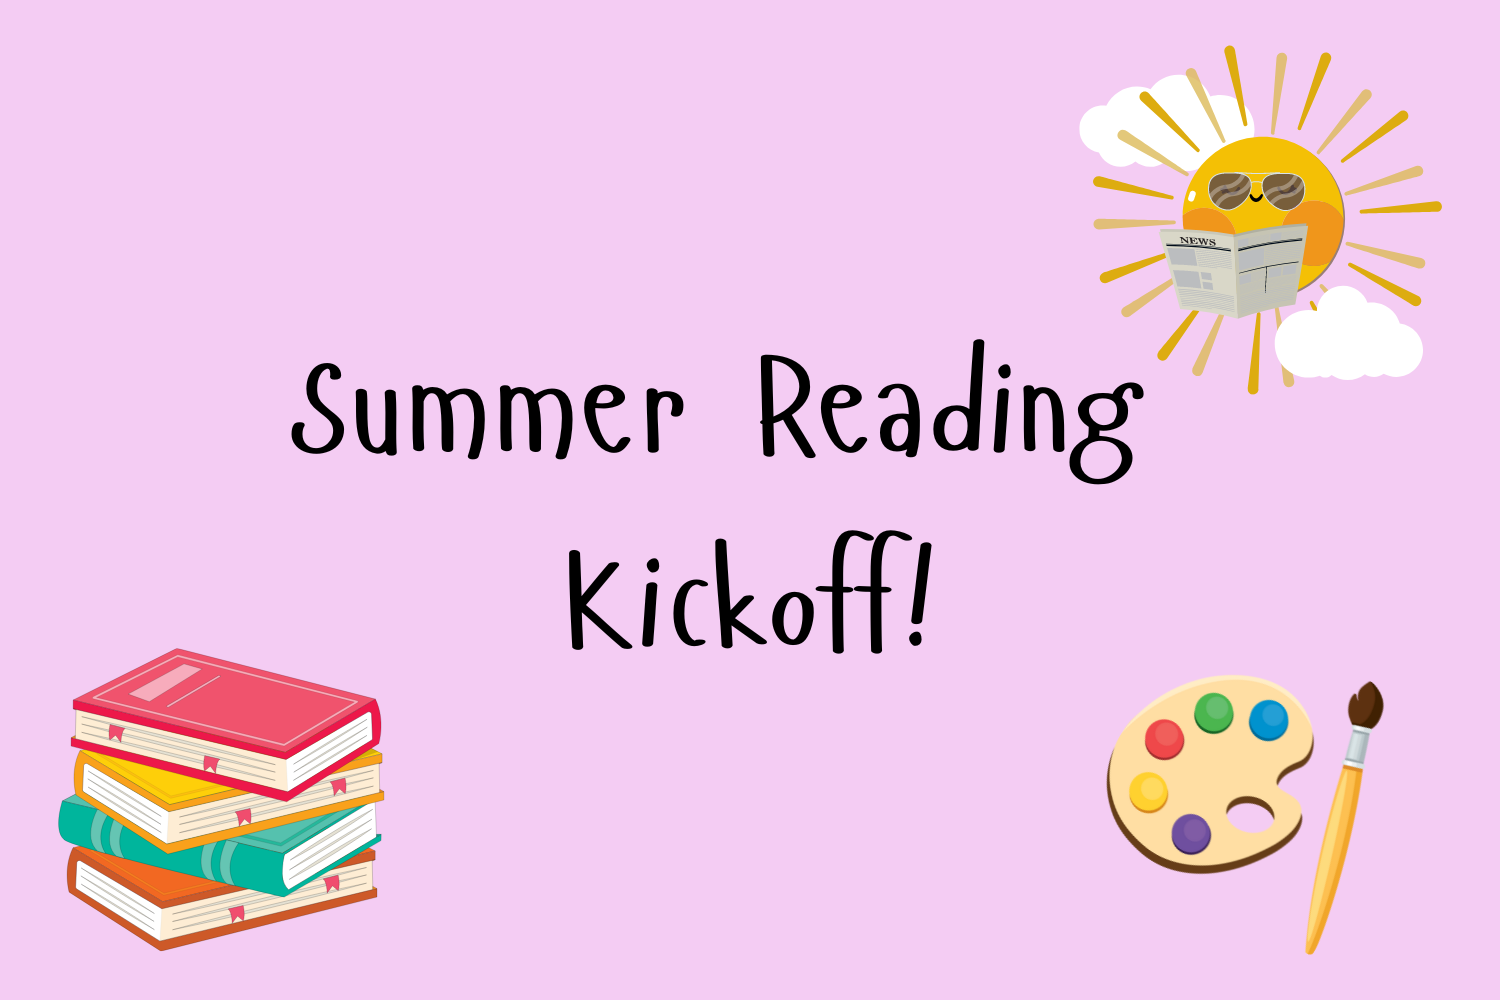 Image that says "summer reading kickoff"